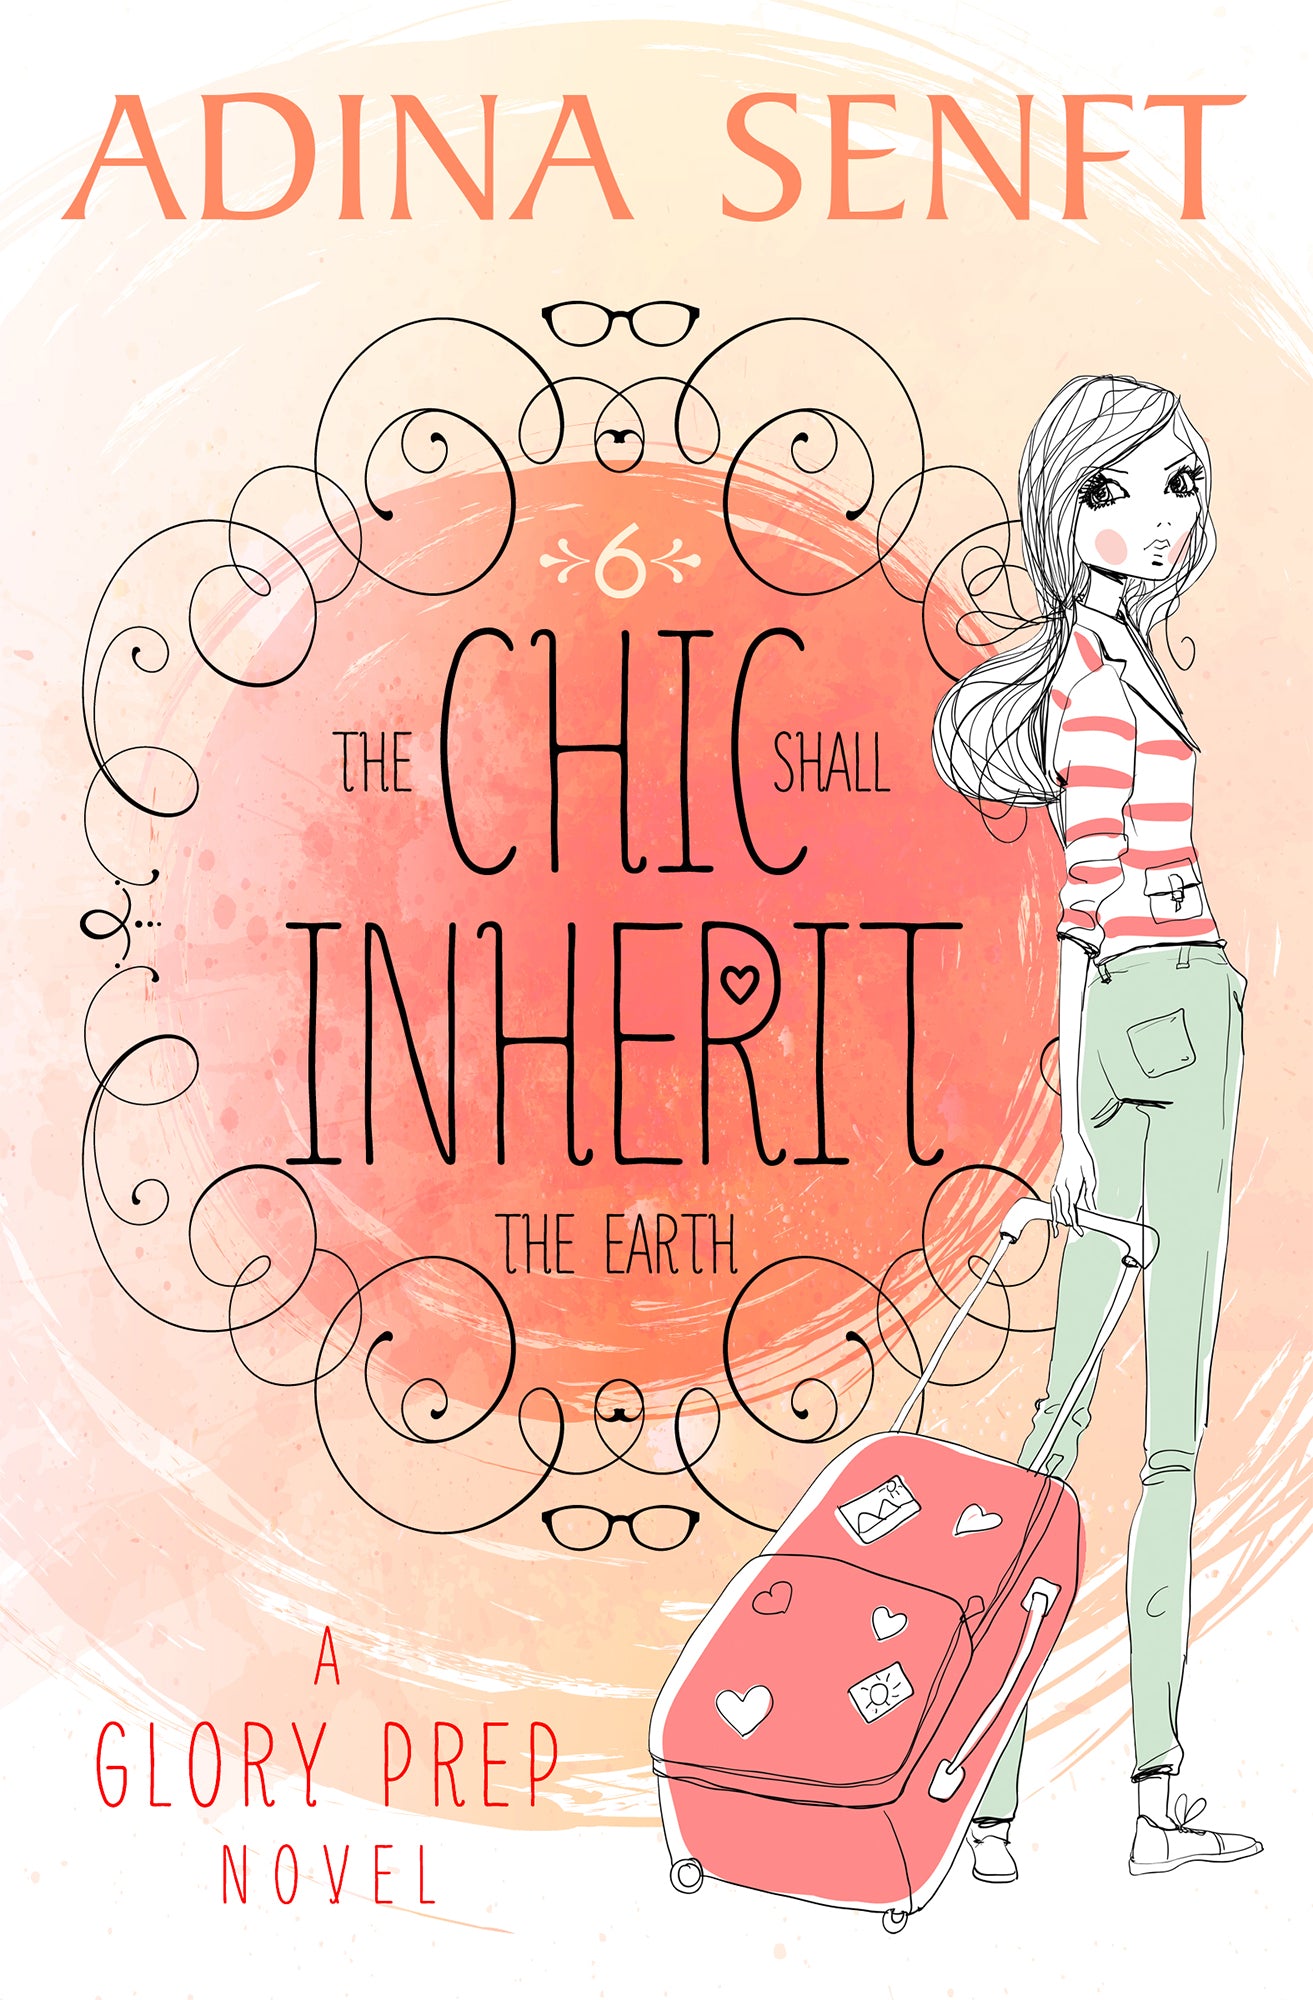 The Chic Shall Inherit the Earth by Adina Senft